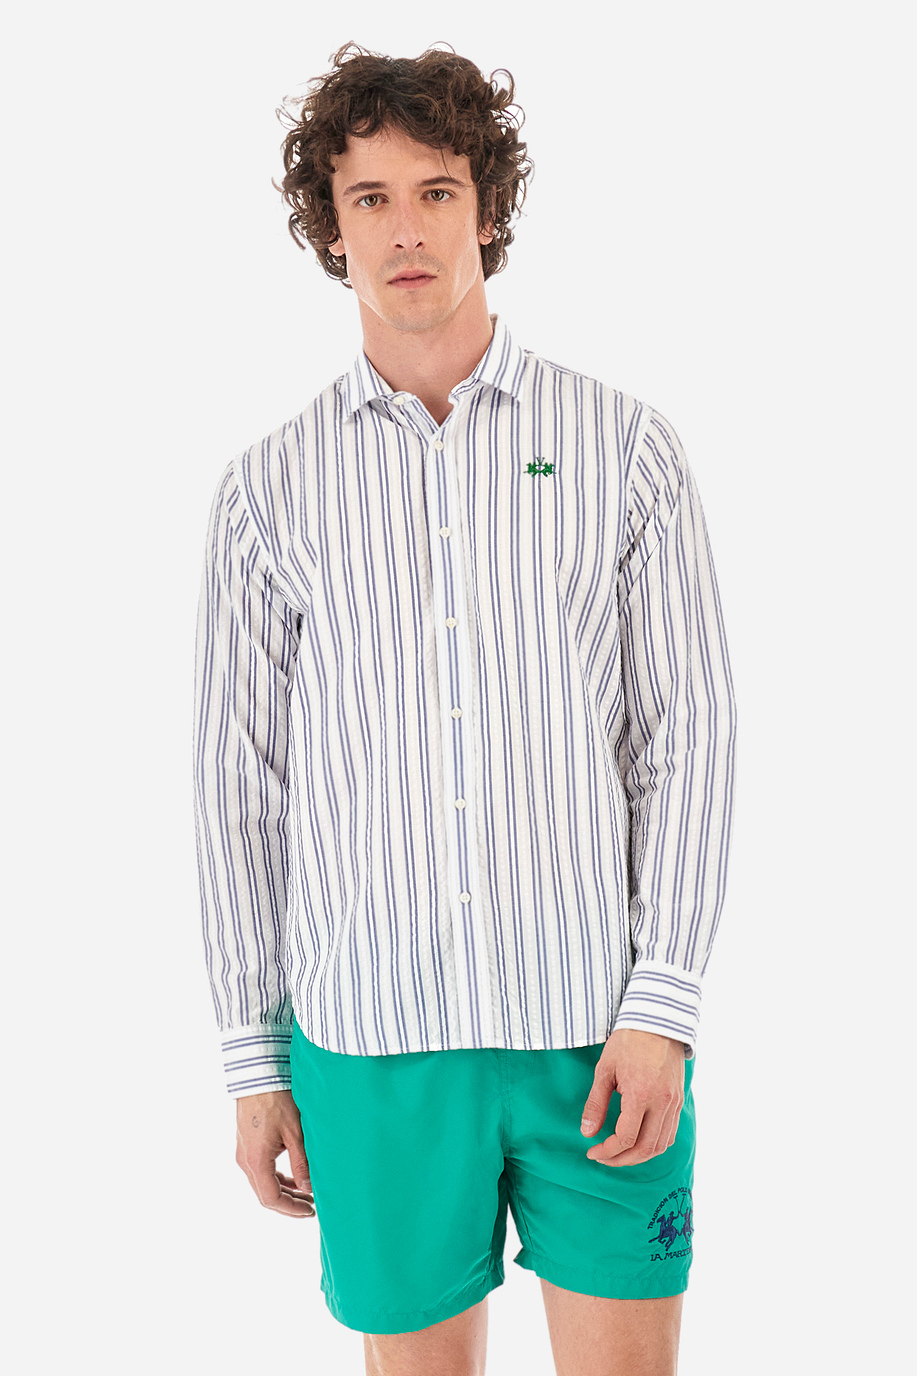 Cotton shirt with a striped patterned - Innocent - New Arrivals Men | La Martina - Official Online Shop